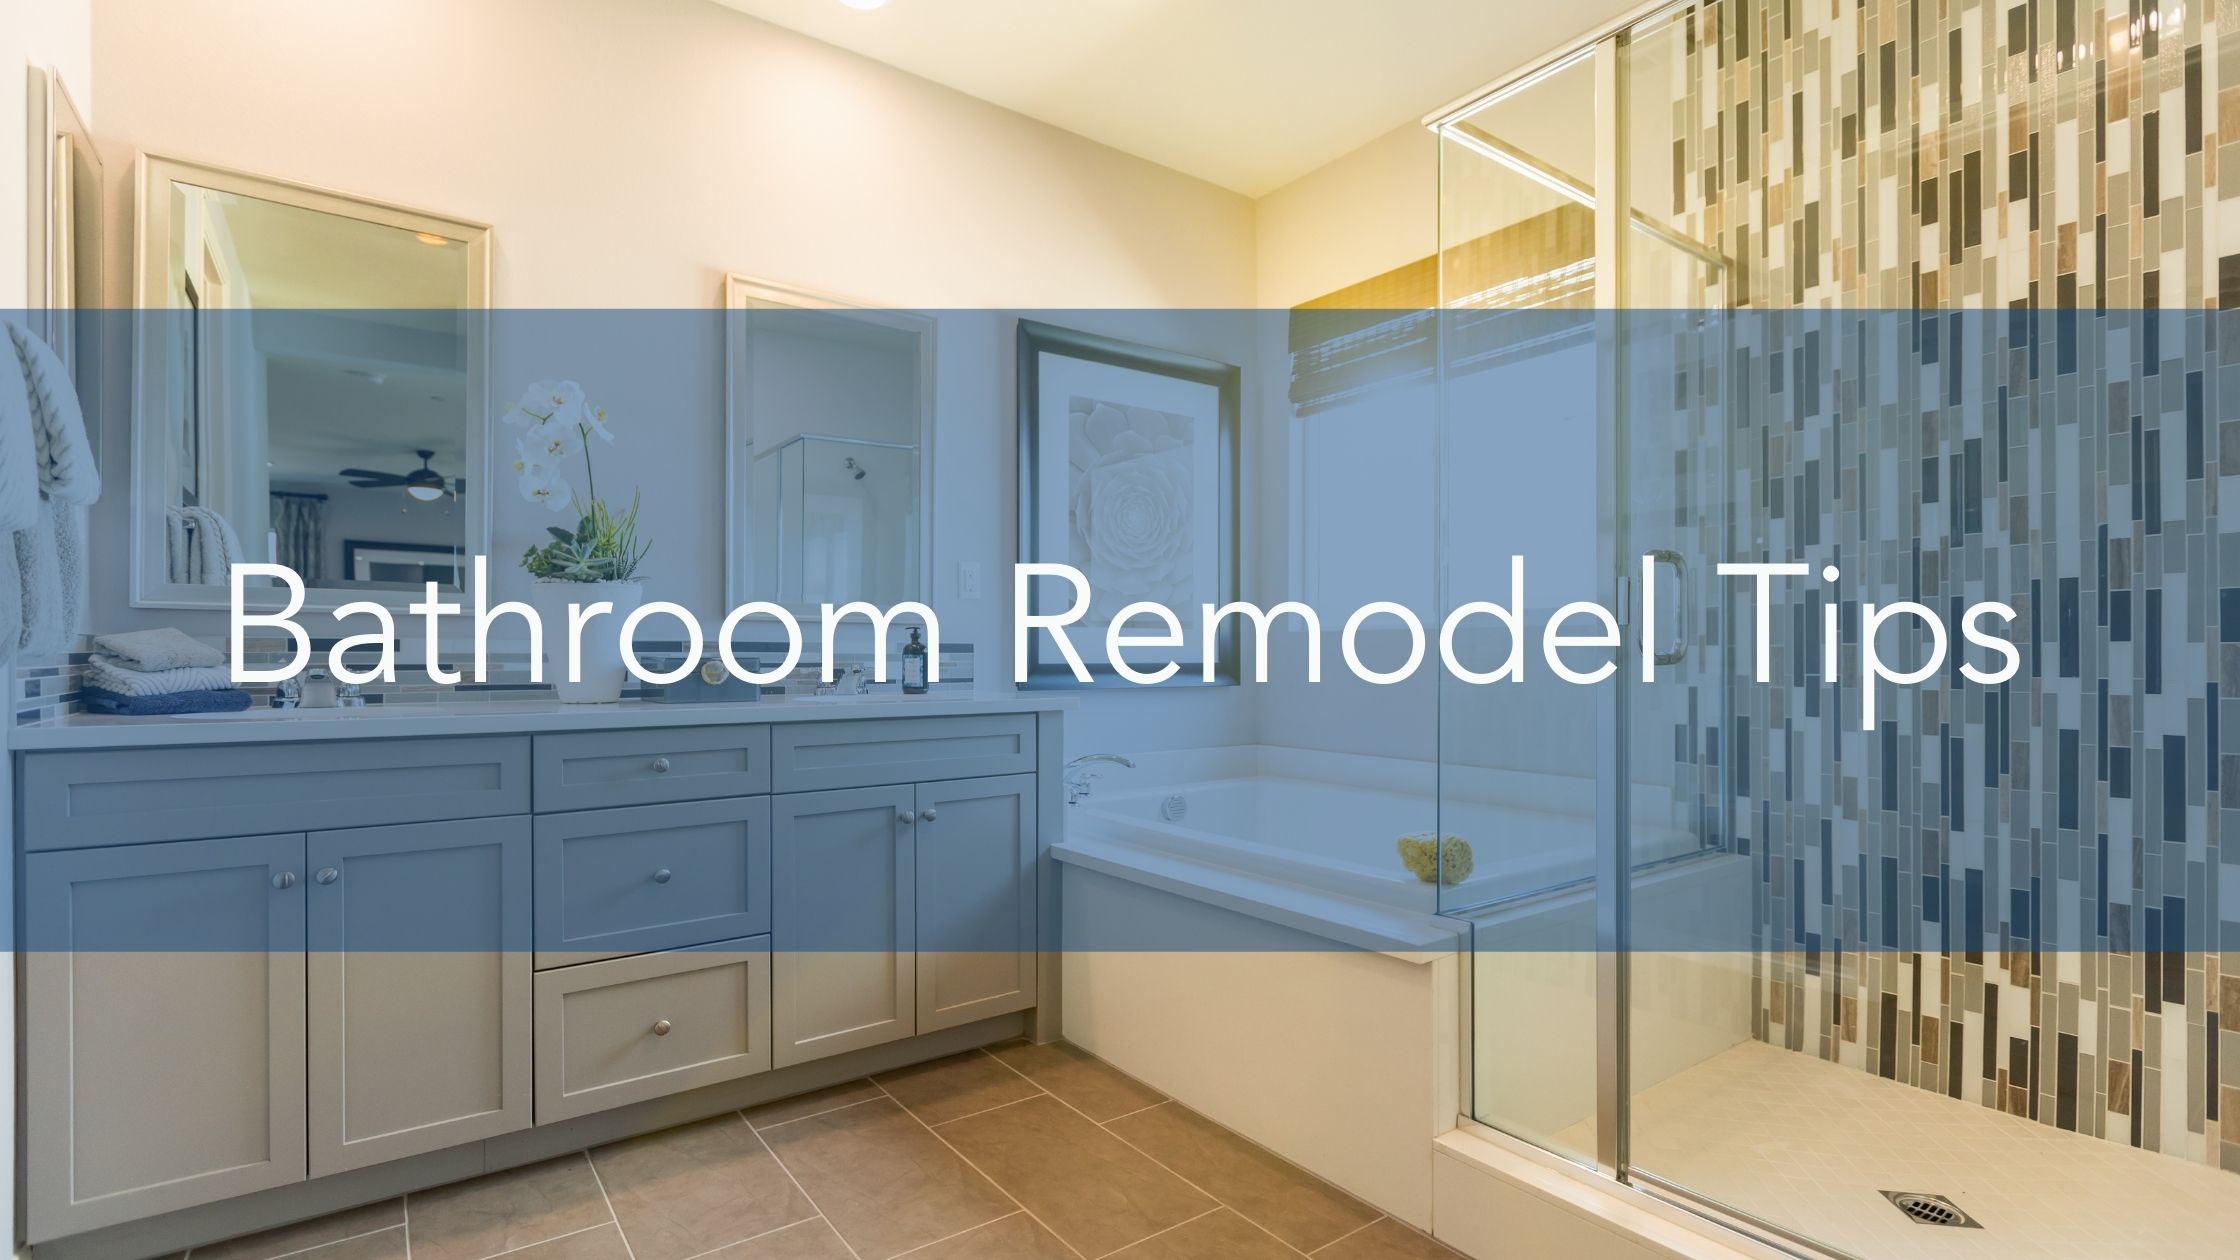 https://handymanconnection.com/wp-content/uploads/2022/04/Bathroom-Remodel-Tips.jpg